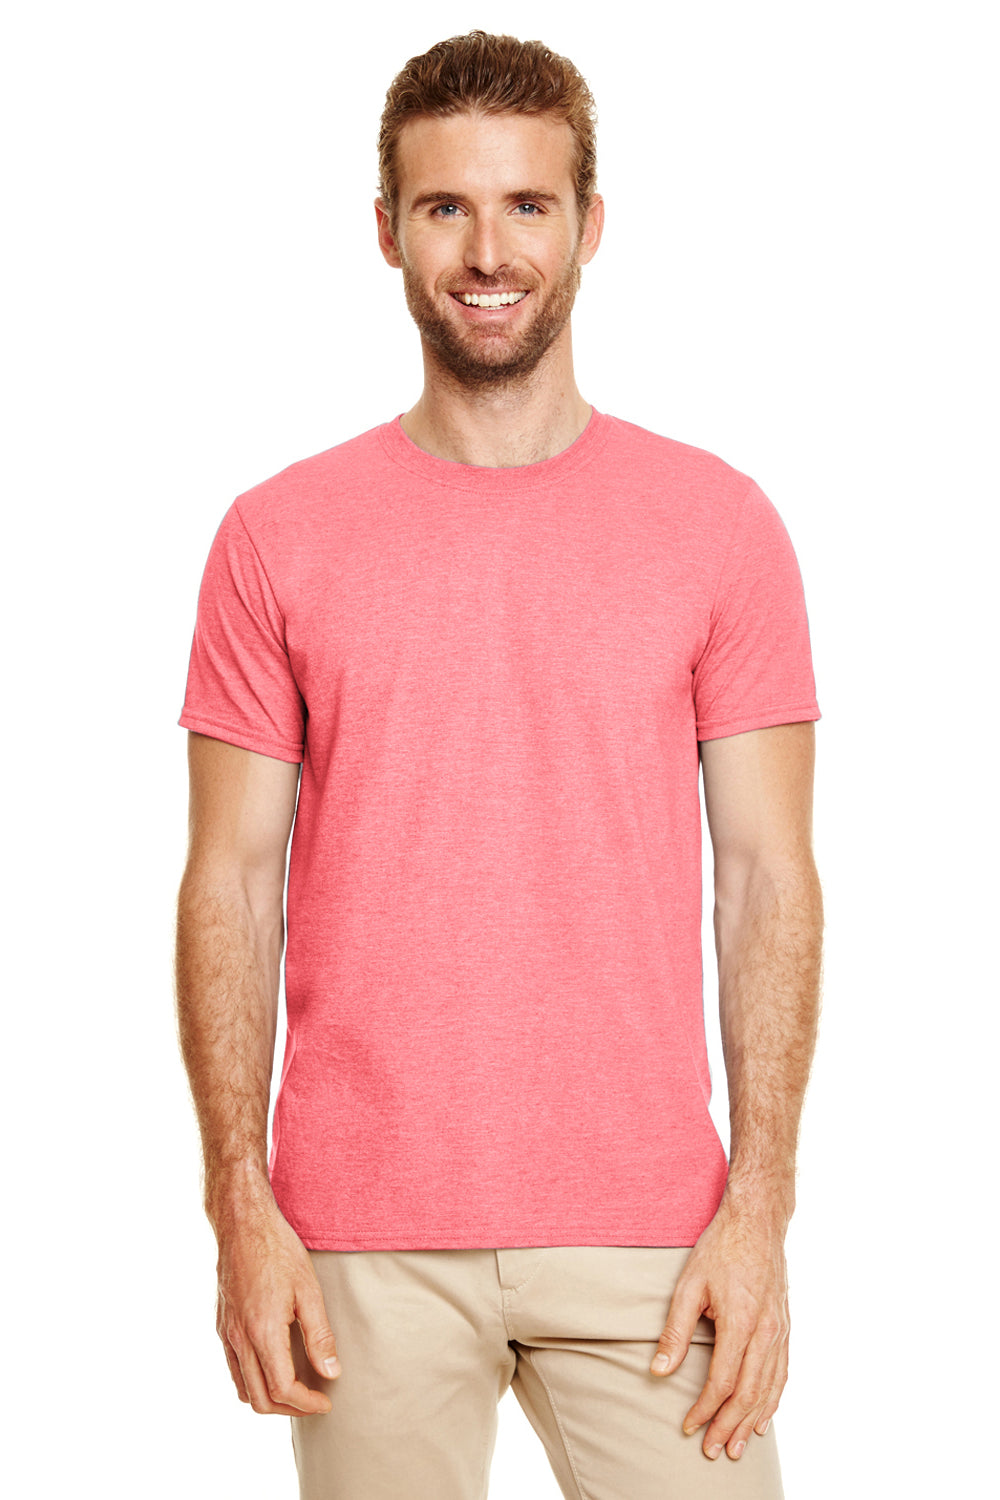 Gildan G640 Mens Softstyle Short Sleeve Crewneck T-Shirt Heather Coral Silk Pink Front